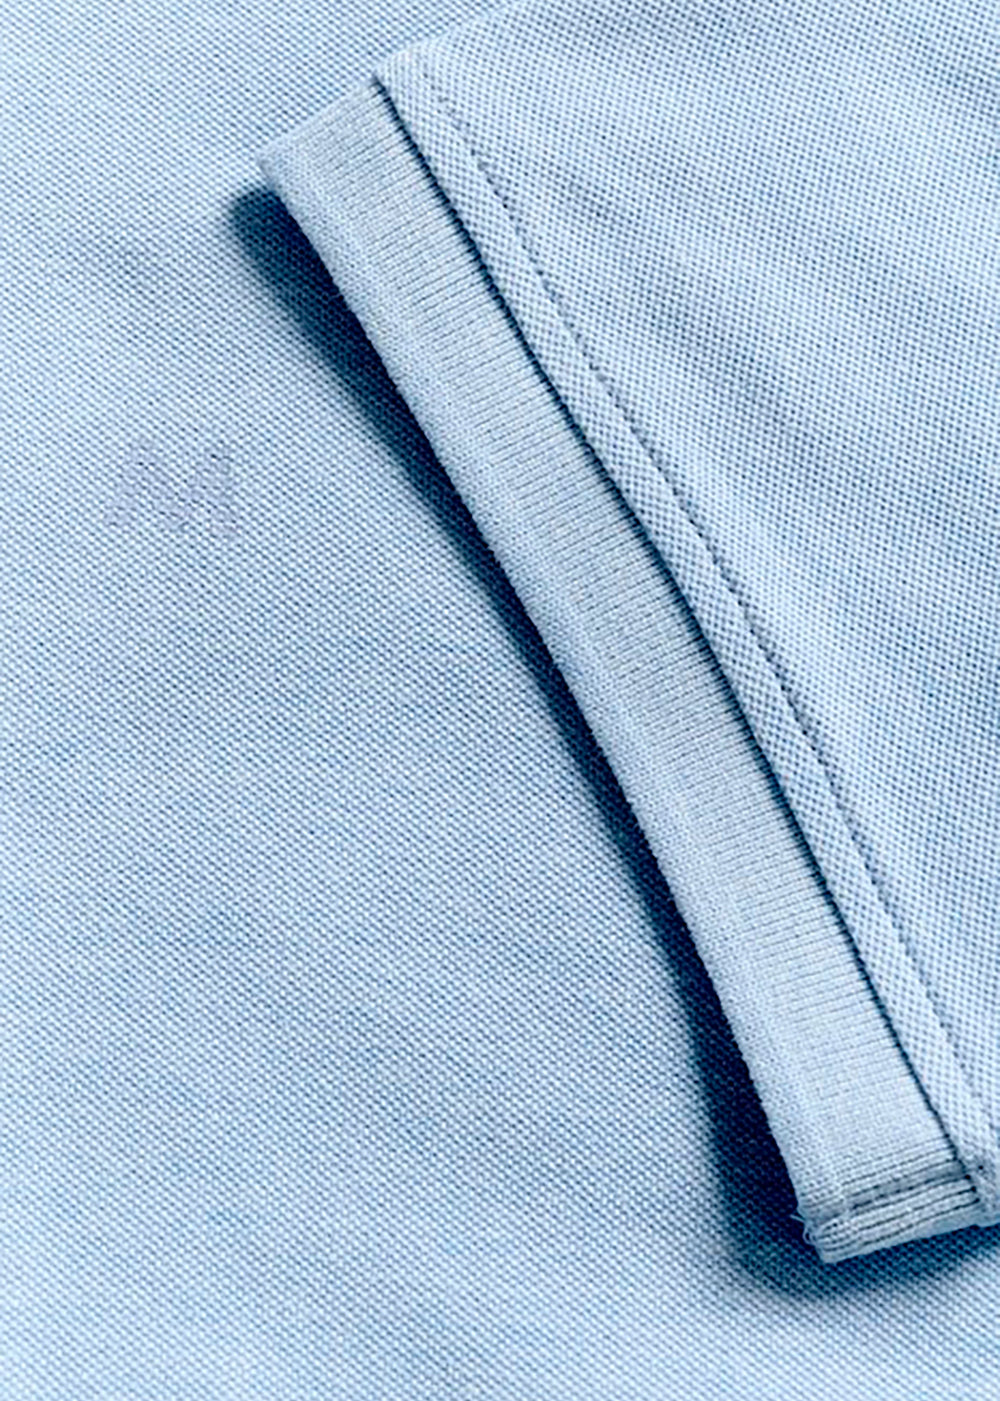 Poleo Melange Polo T-Shirt - Blissful Blue - Matinique Canada - Danali